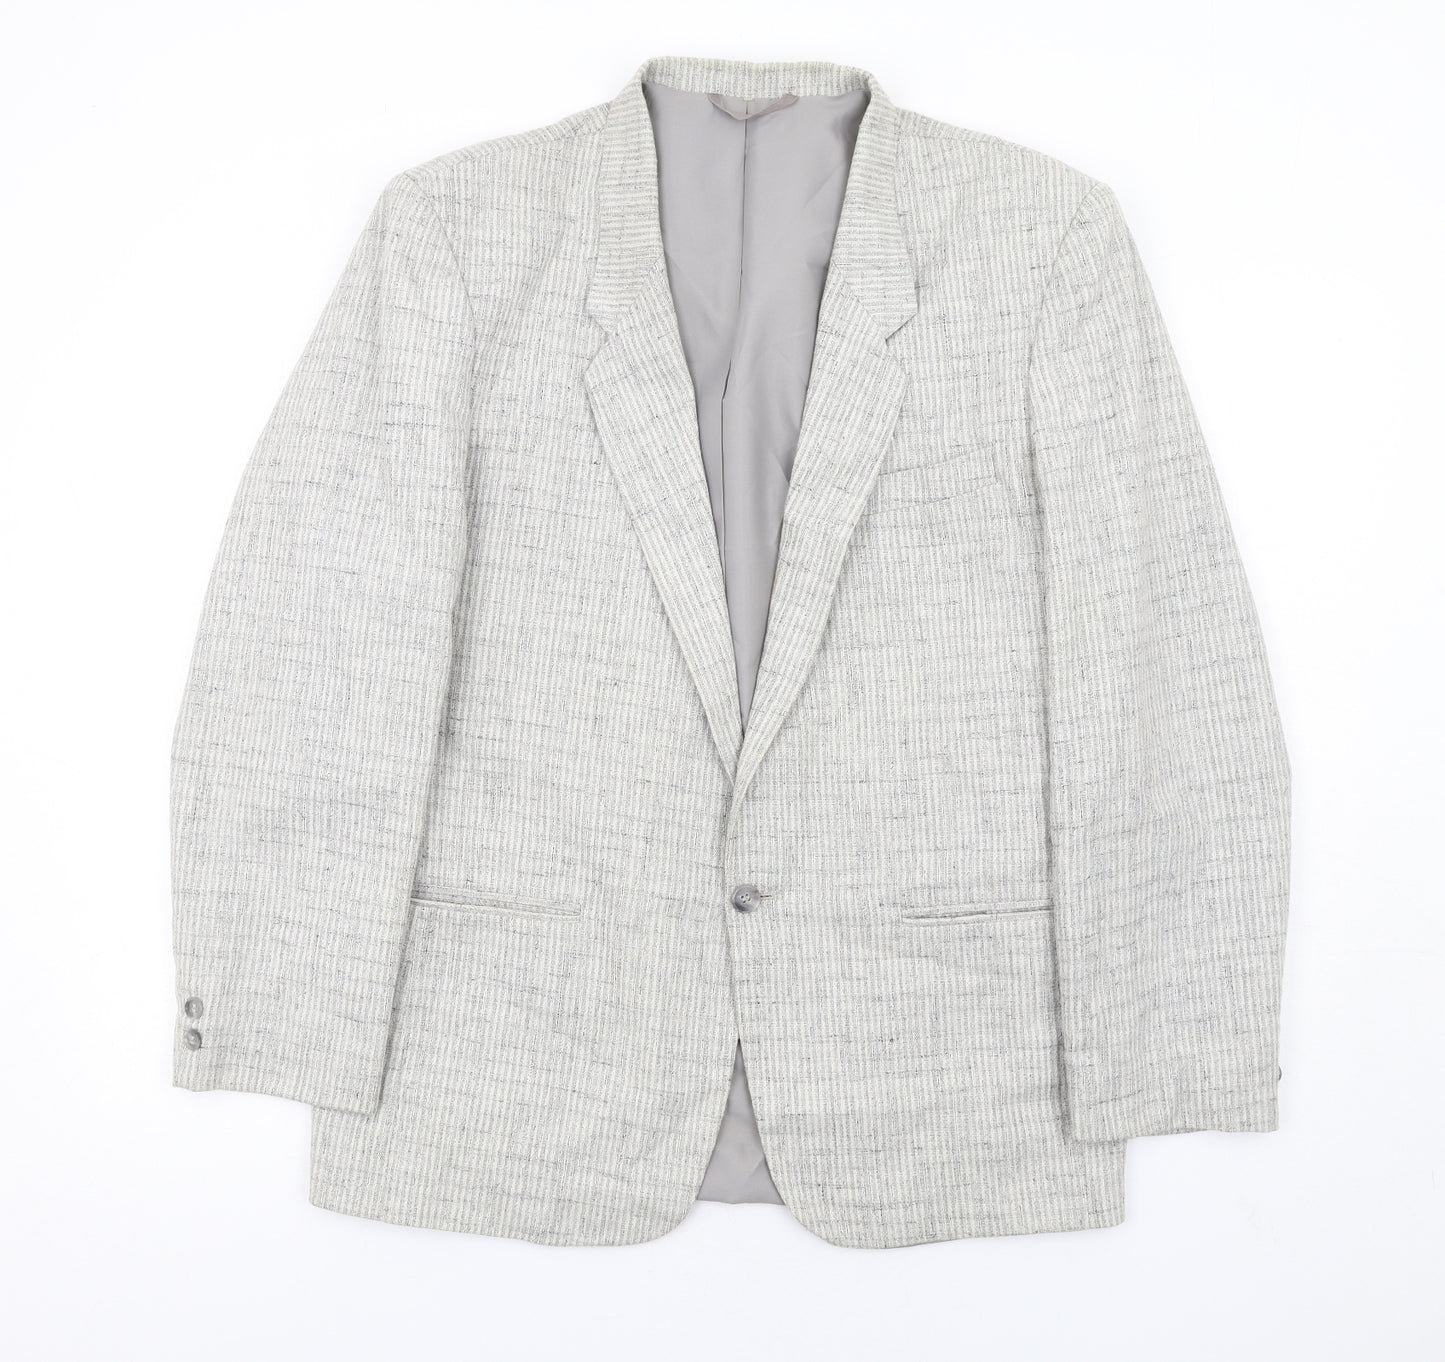 Zootz Mens Grey Striped Polyester Jacket Suit Jacket Size 38 Regular